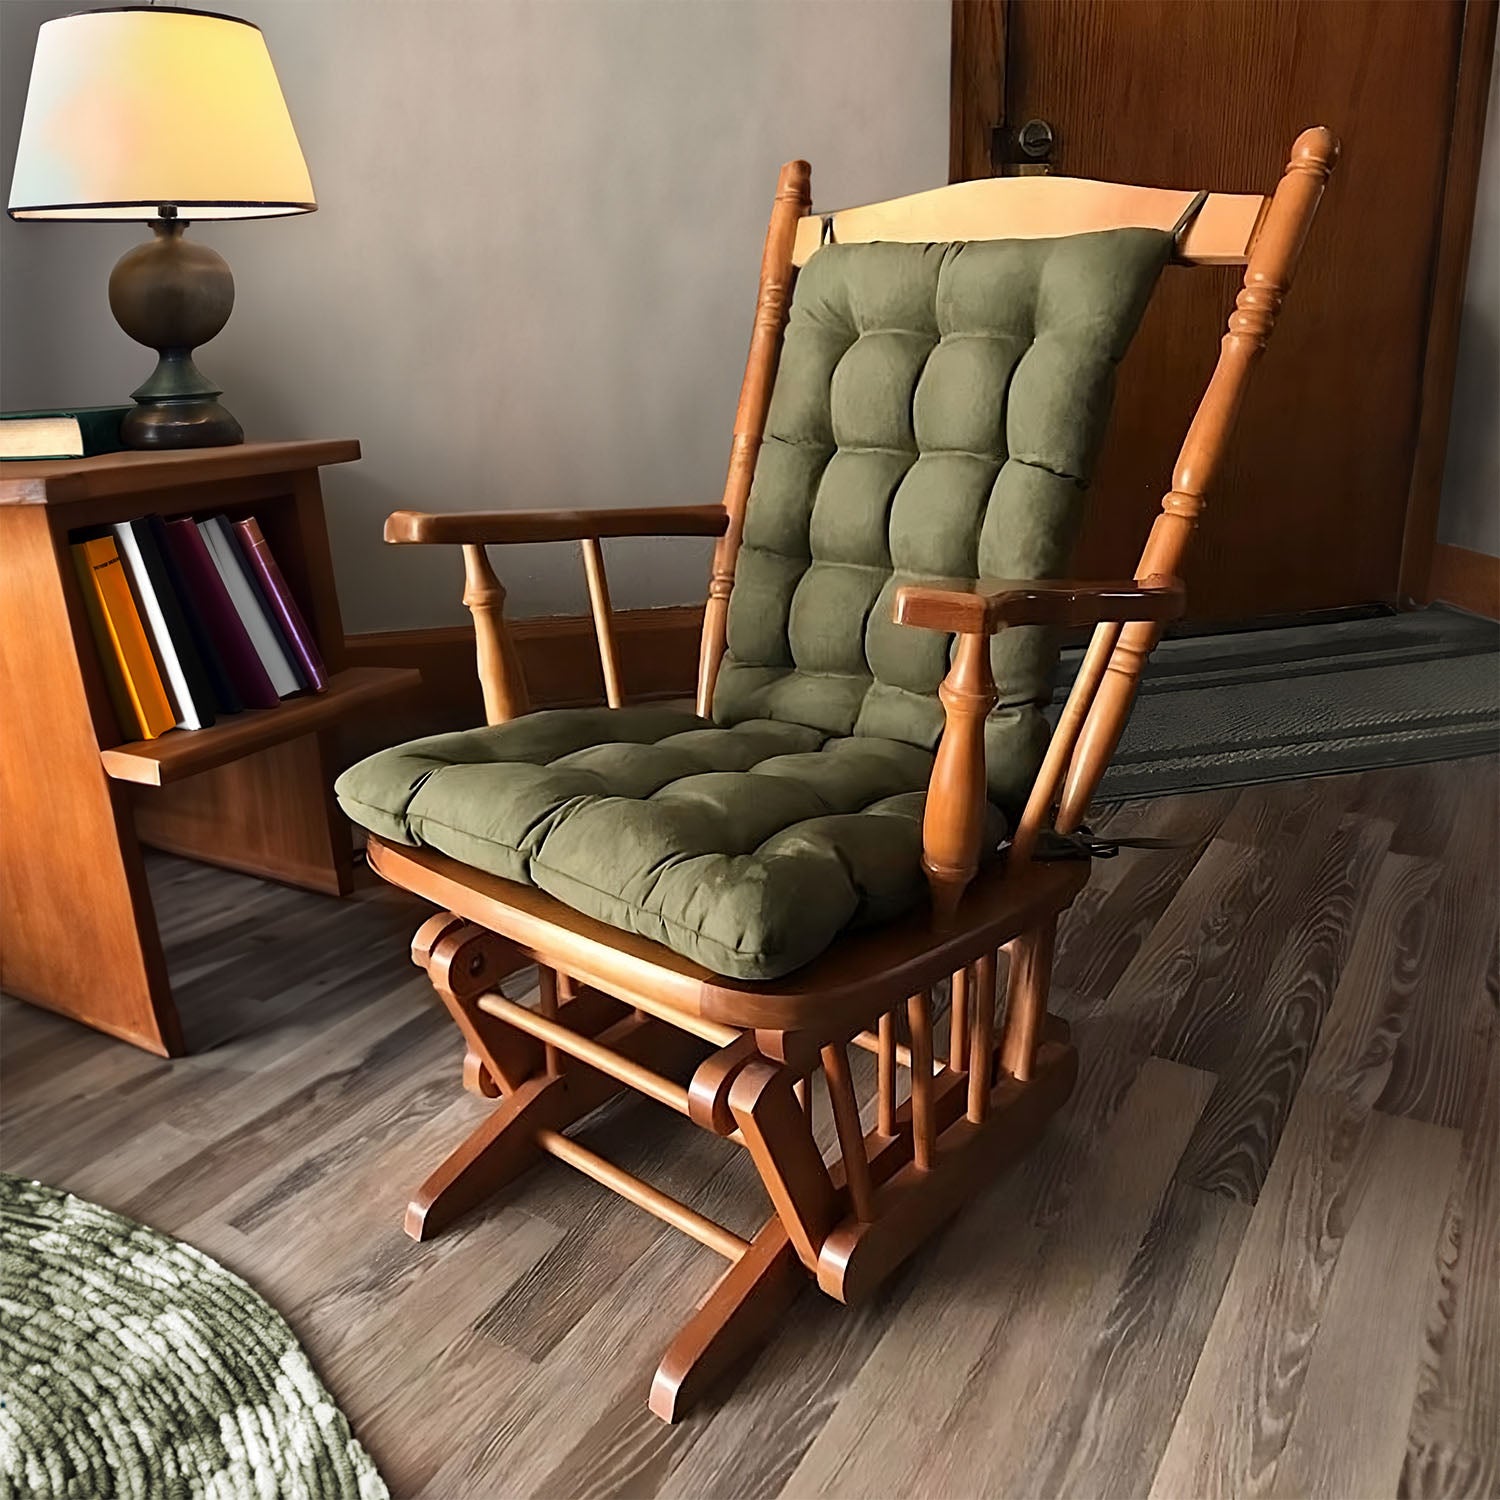 Cotton Duck Boxwood Dining Chair Pads - Never Flatten Chair Cushion Da